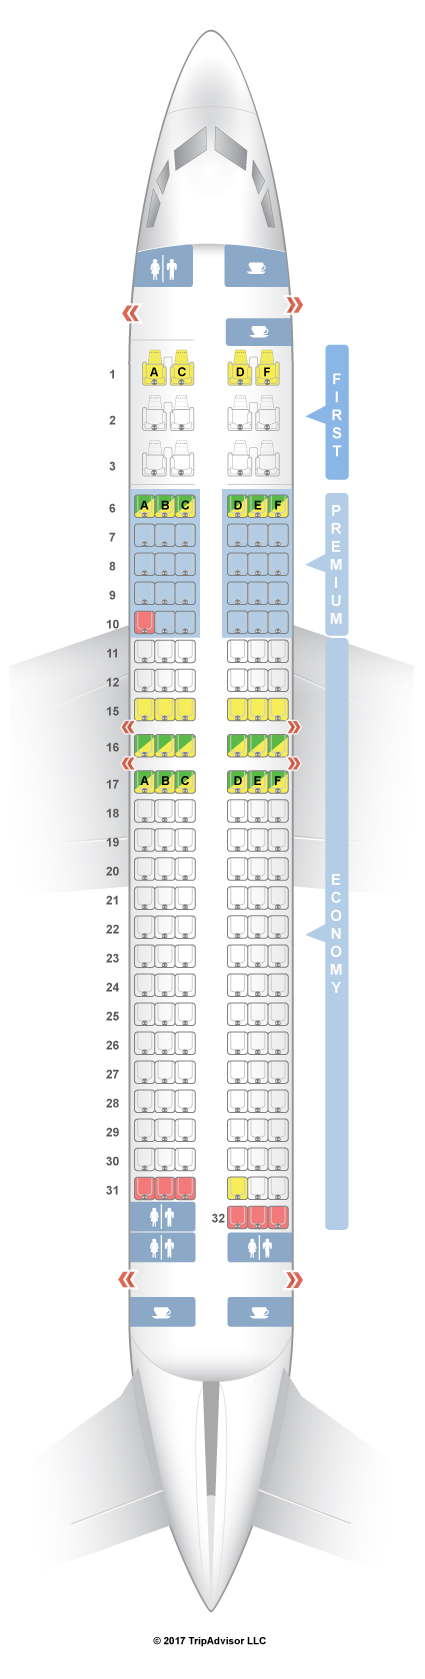 alaska airlines seat map symbols